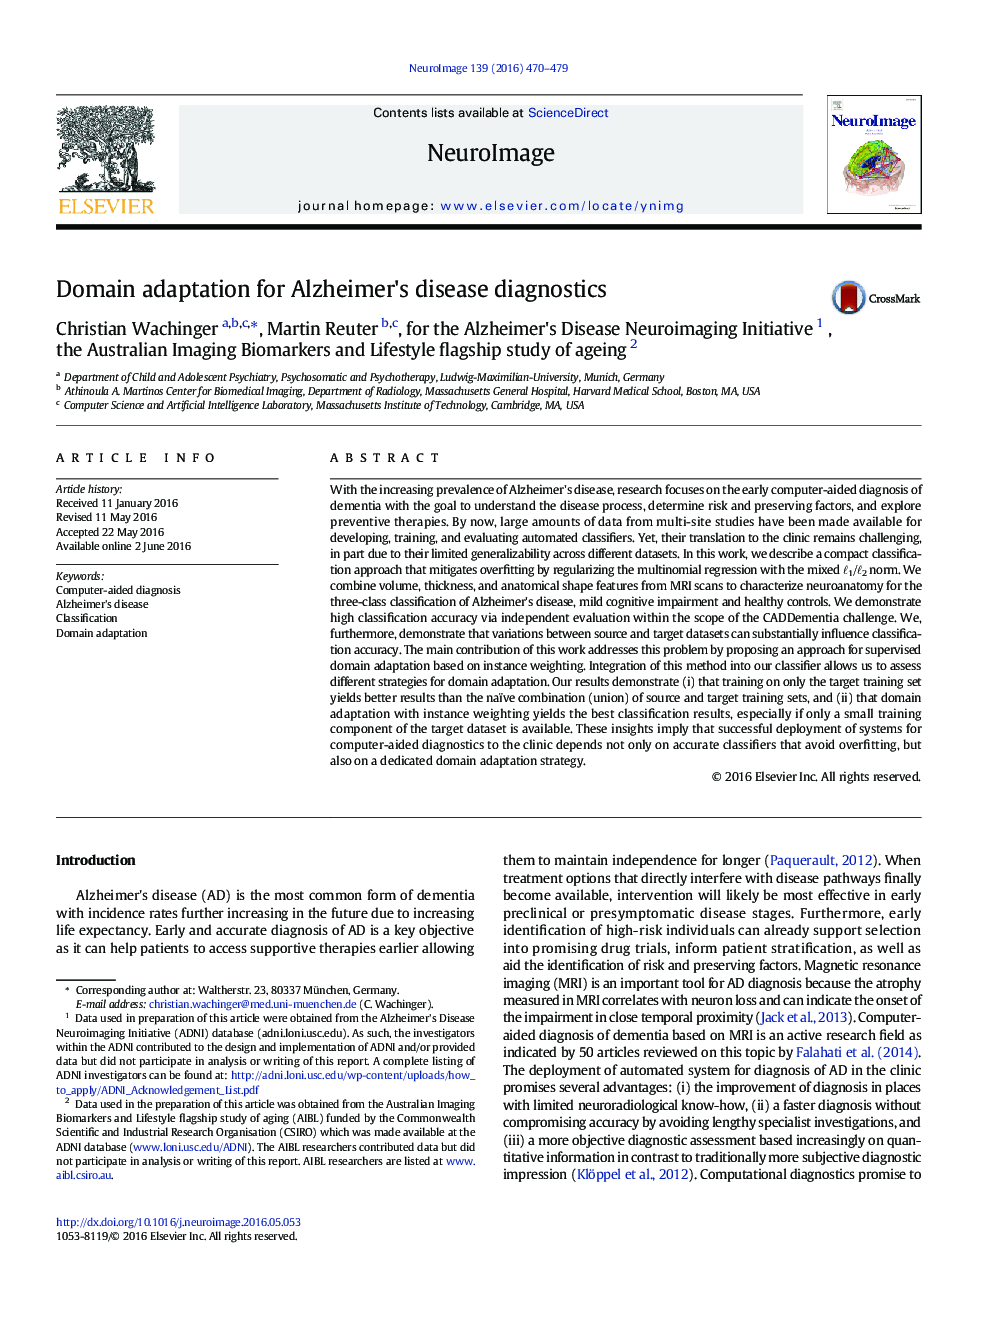 Domain adaptation for Alzheimer's disease diagnostics